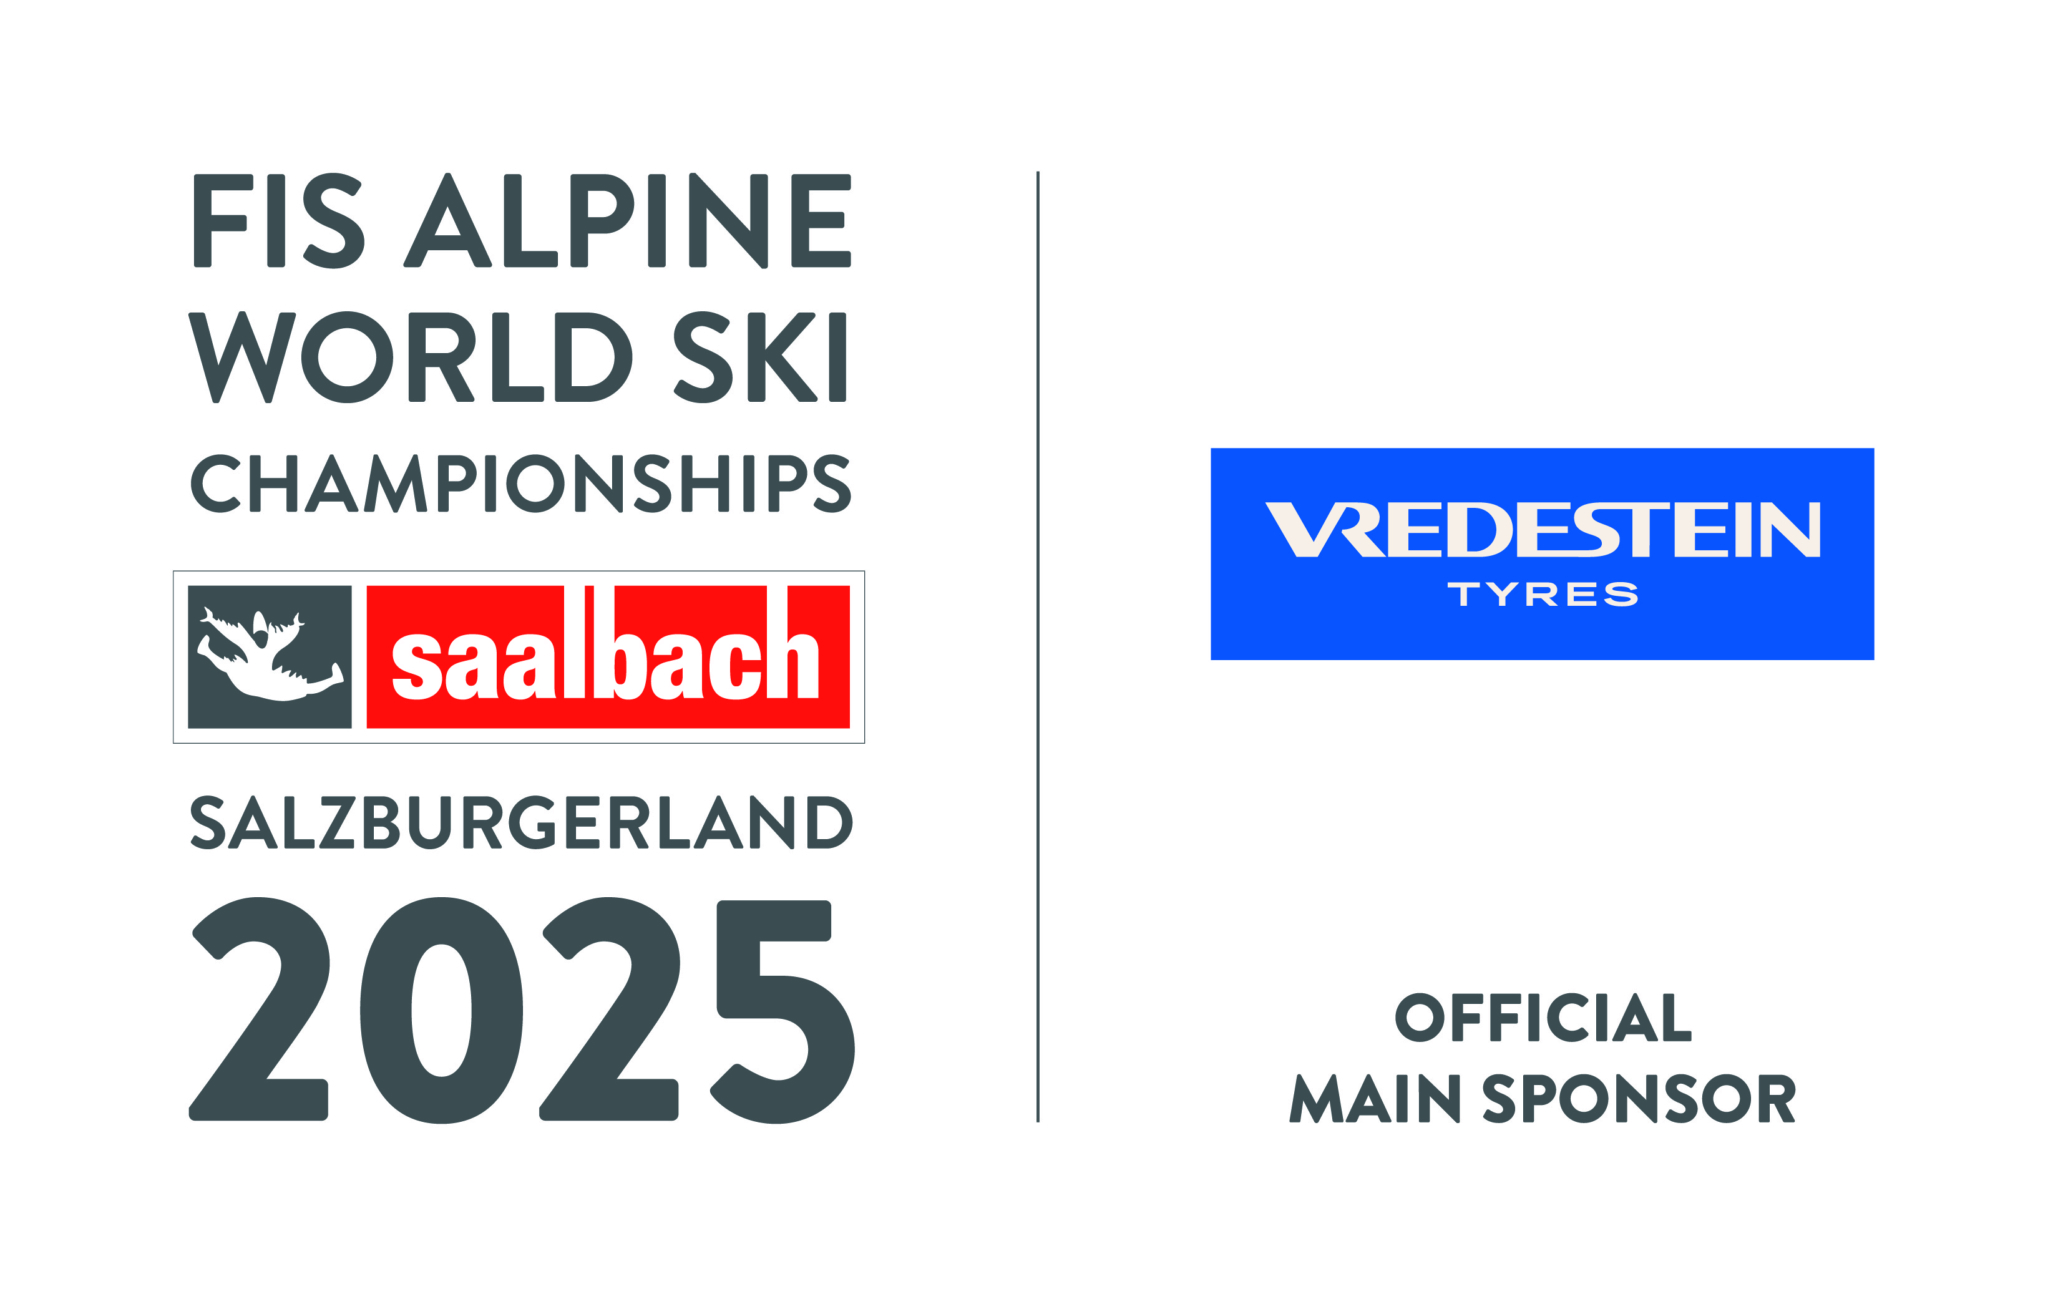 Vredestein become FIS Alpine World Ski Championships 2025 main sponsor